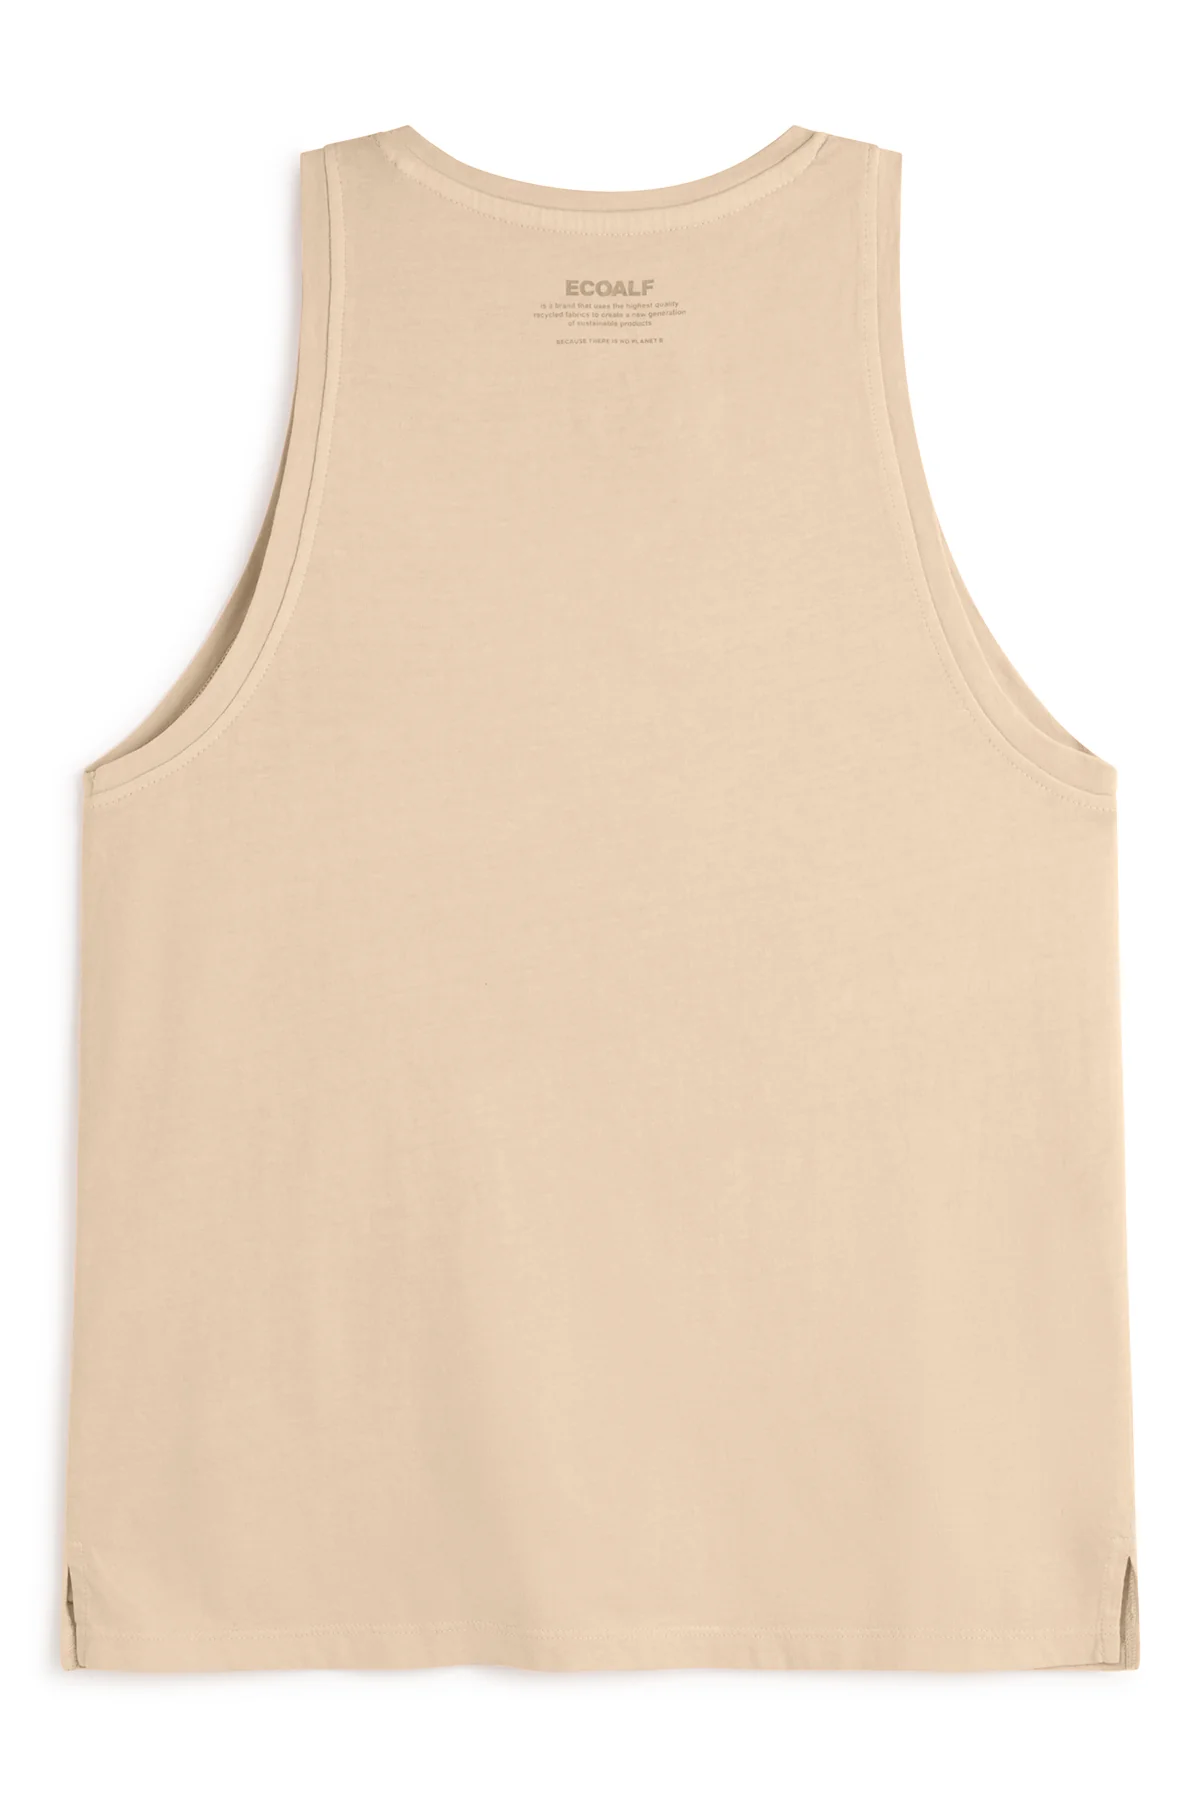 ECOALF camiseta sin mangas color camel - 5